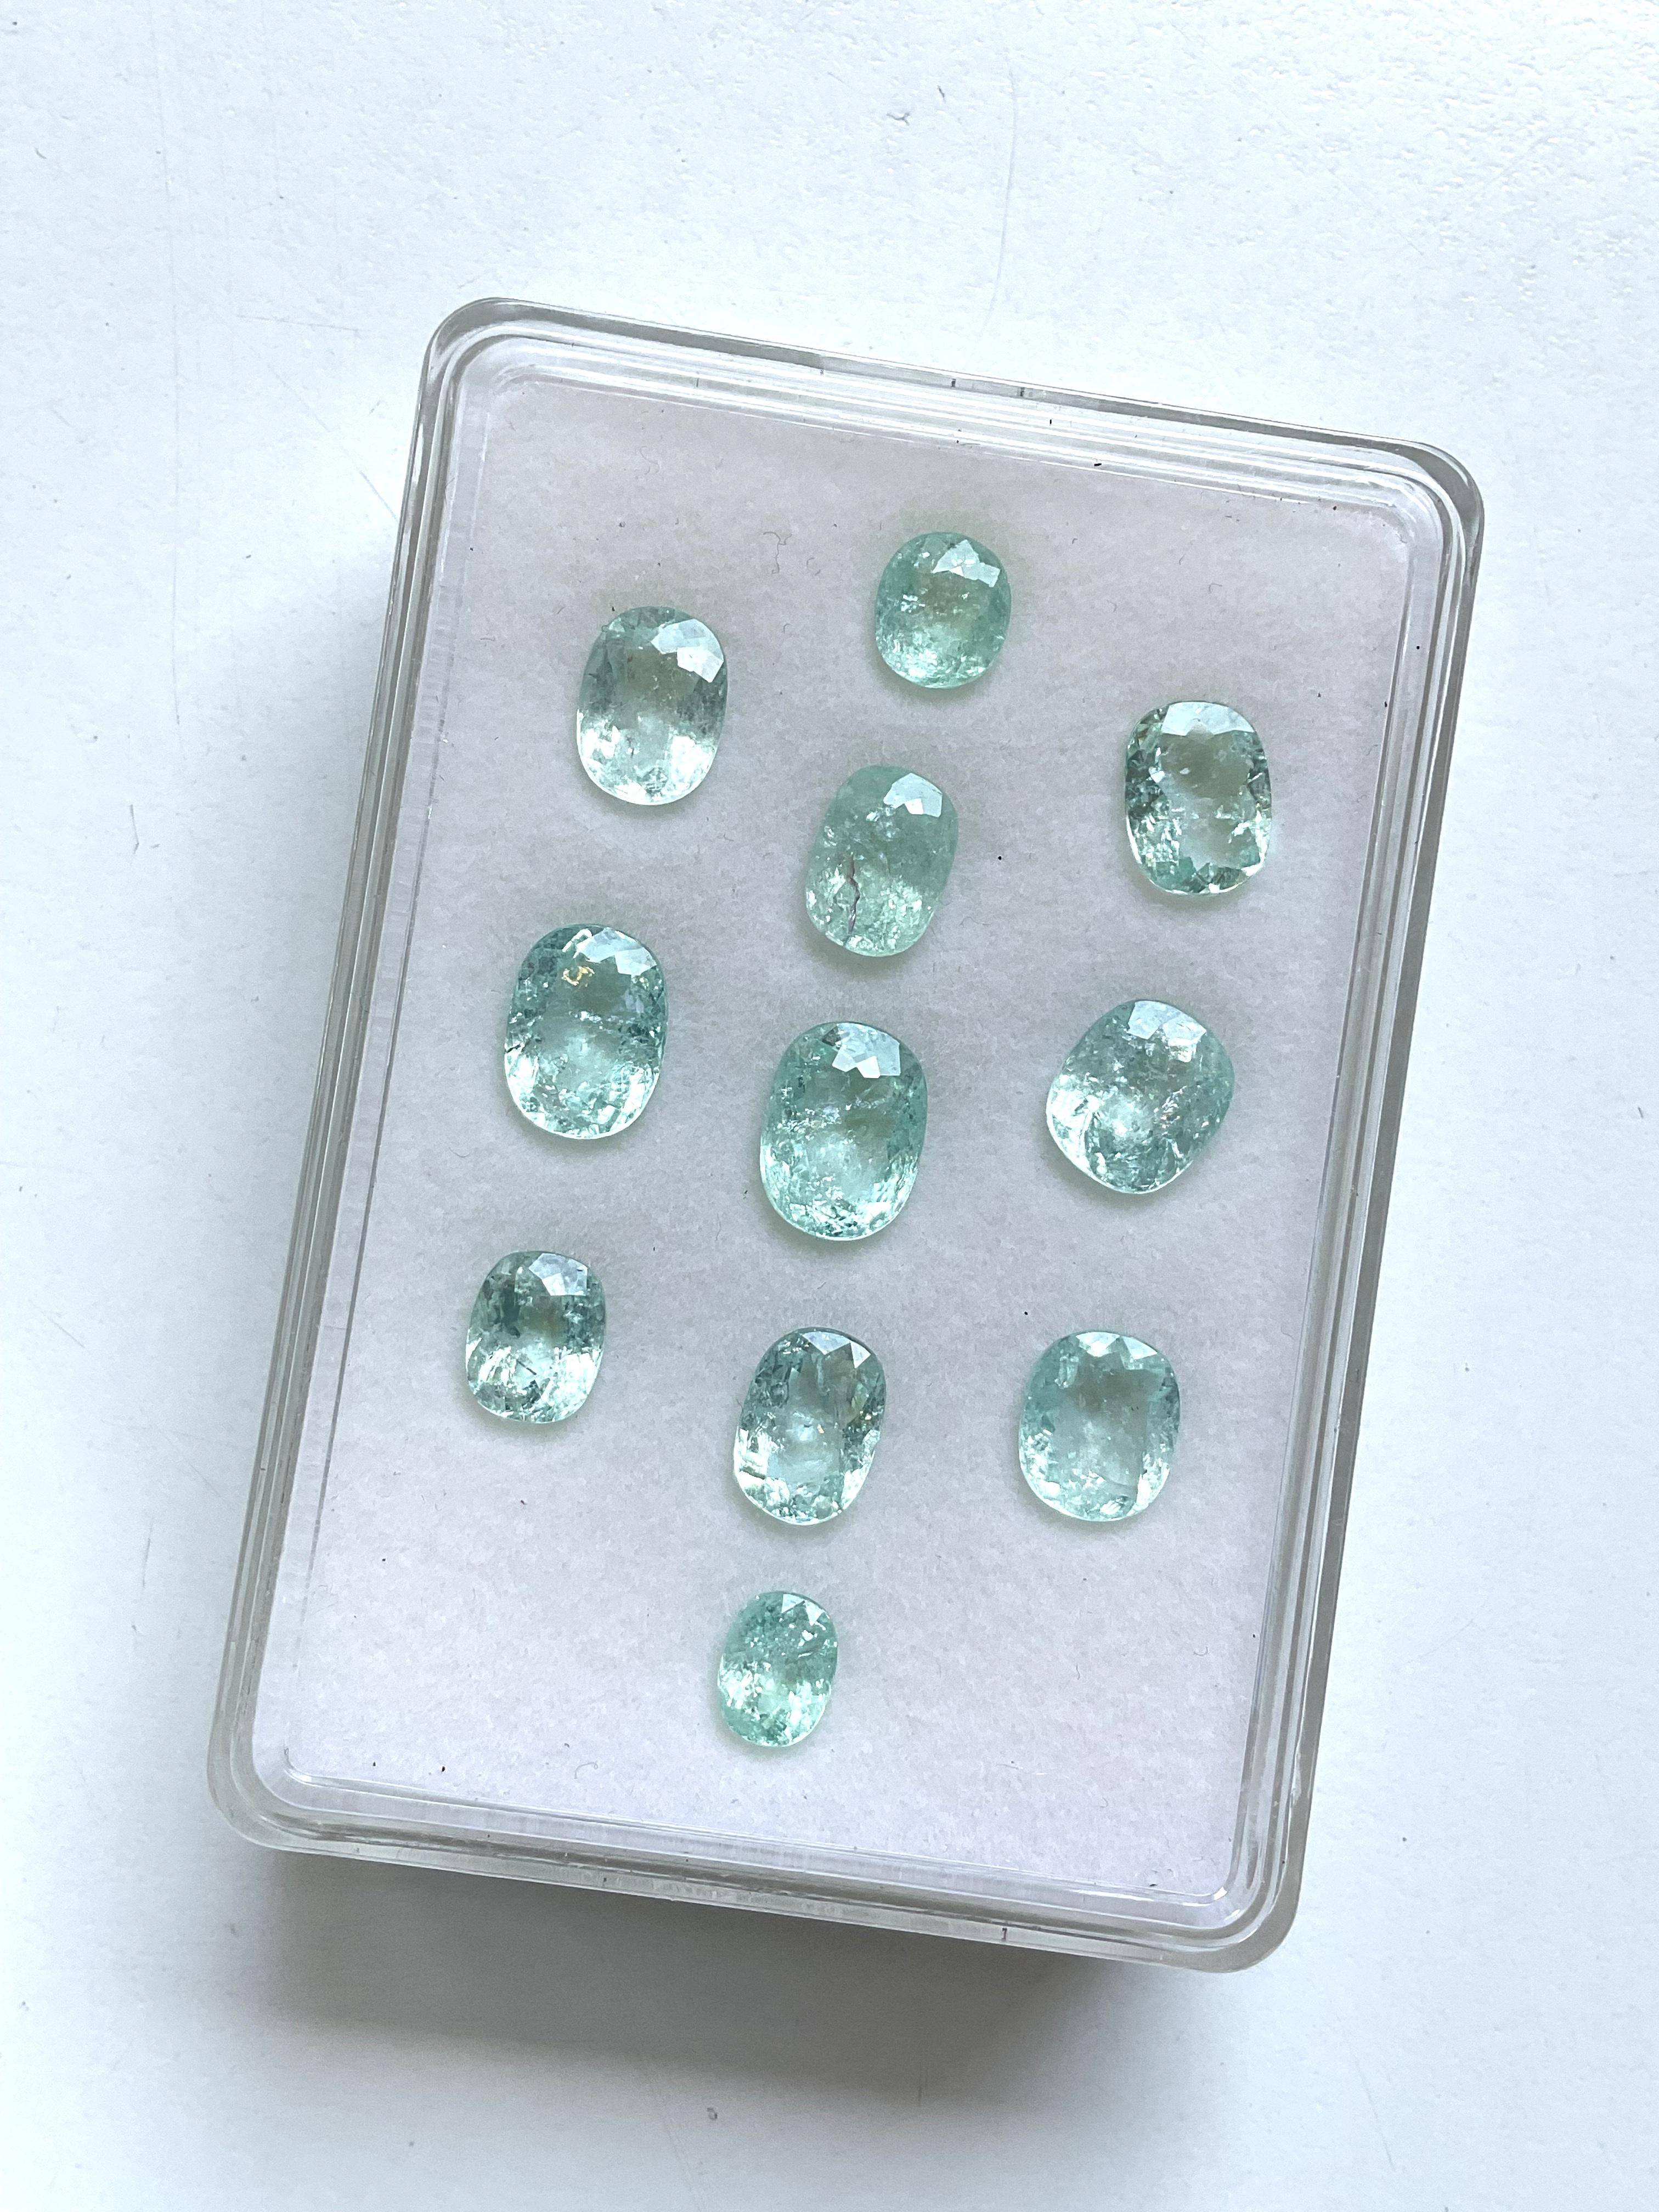 36.04 Carats Paraiba Tourmaline Oval Cut stone Top Quality for Fine Jewelry Gem For Sale 2